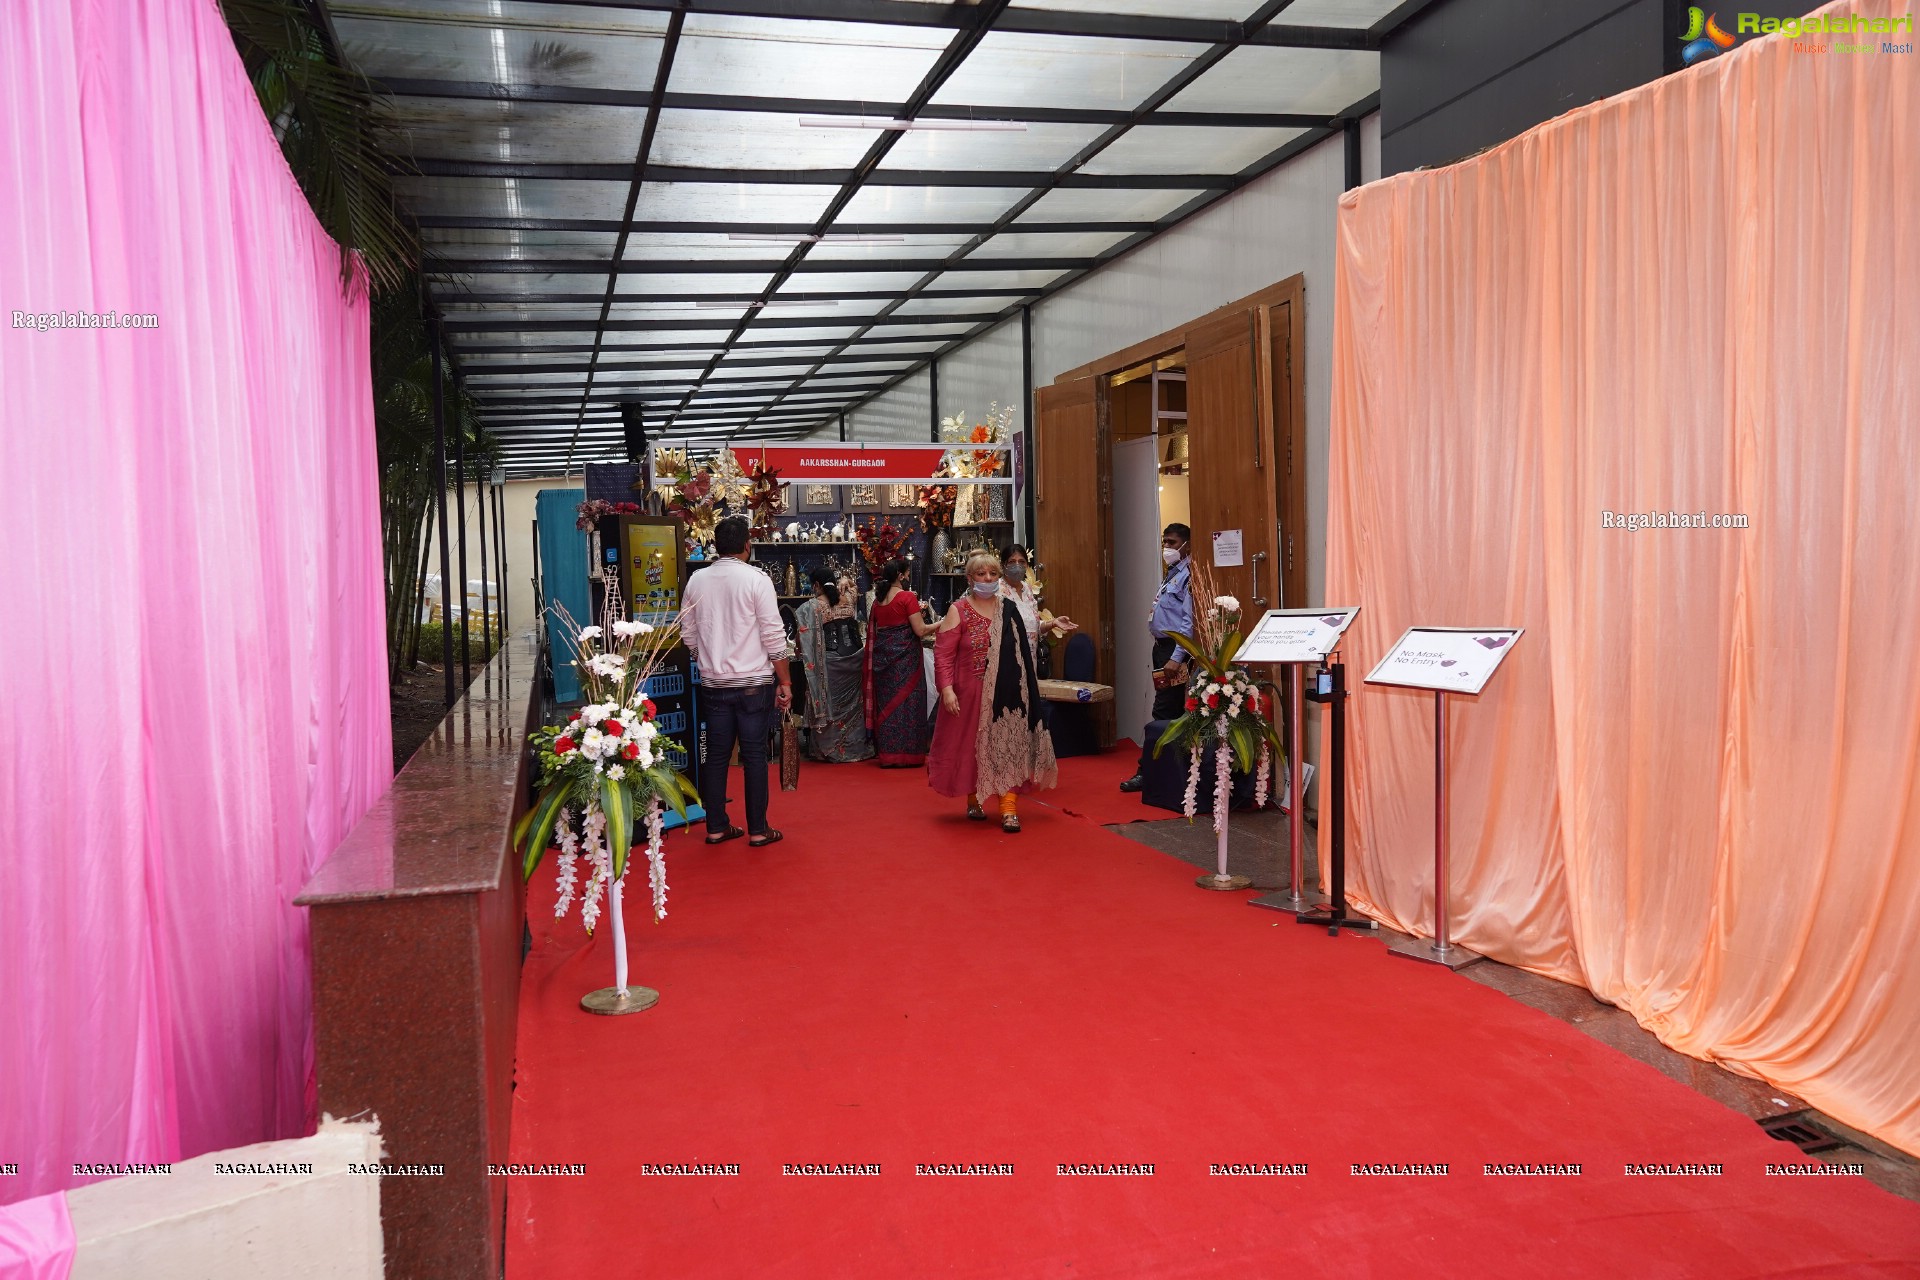 Hi-Life Exhibition November 2021 Kicks Off at The Lalit Ashok, Bengaluru